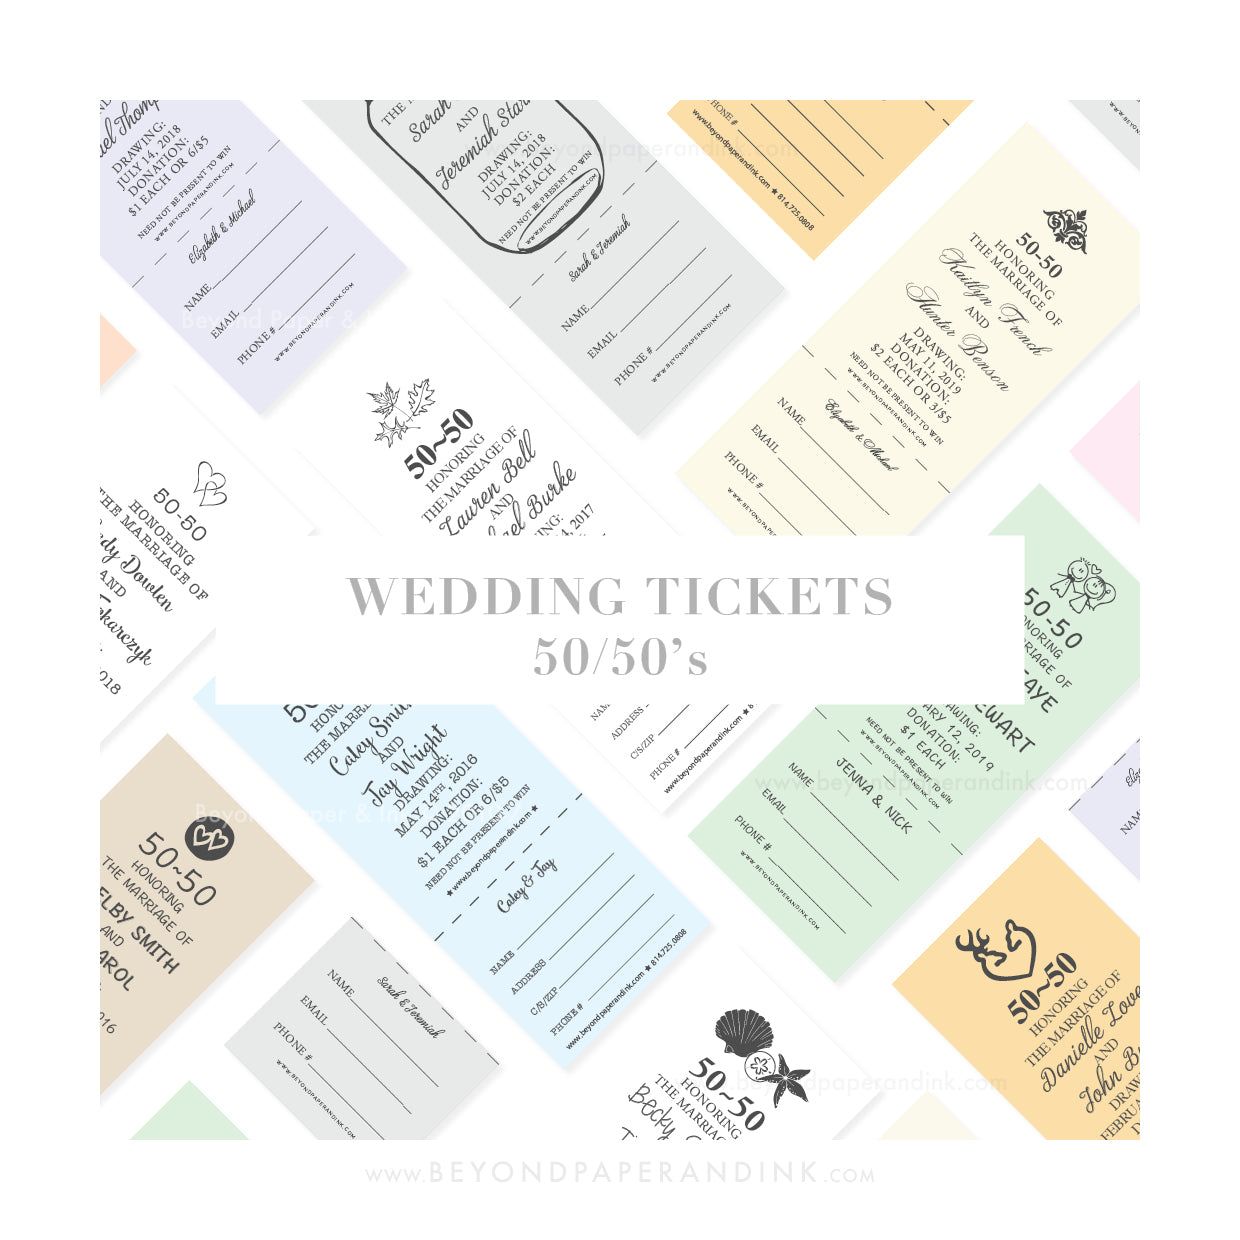 "Wedding Tickets: 50/50's" - Stag n' Drag Buck n' Doe 50/50 Raffle Tickets by Beyond Paper & Ink